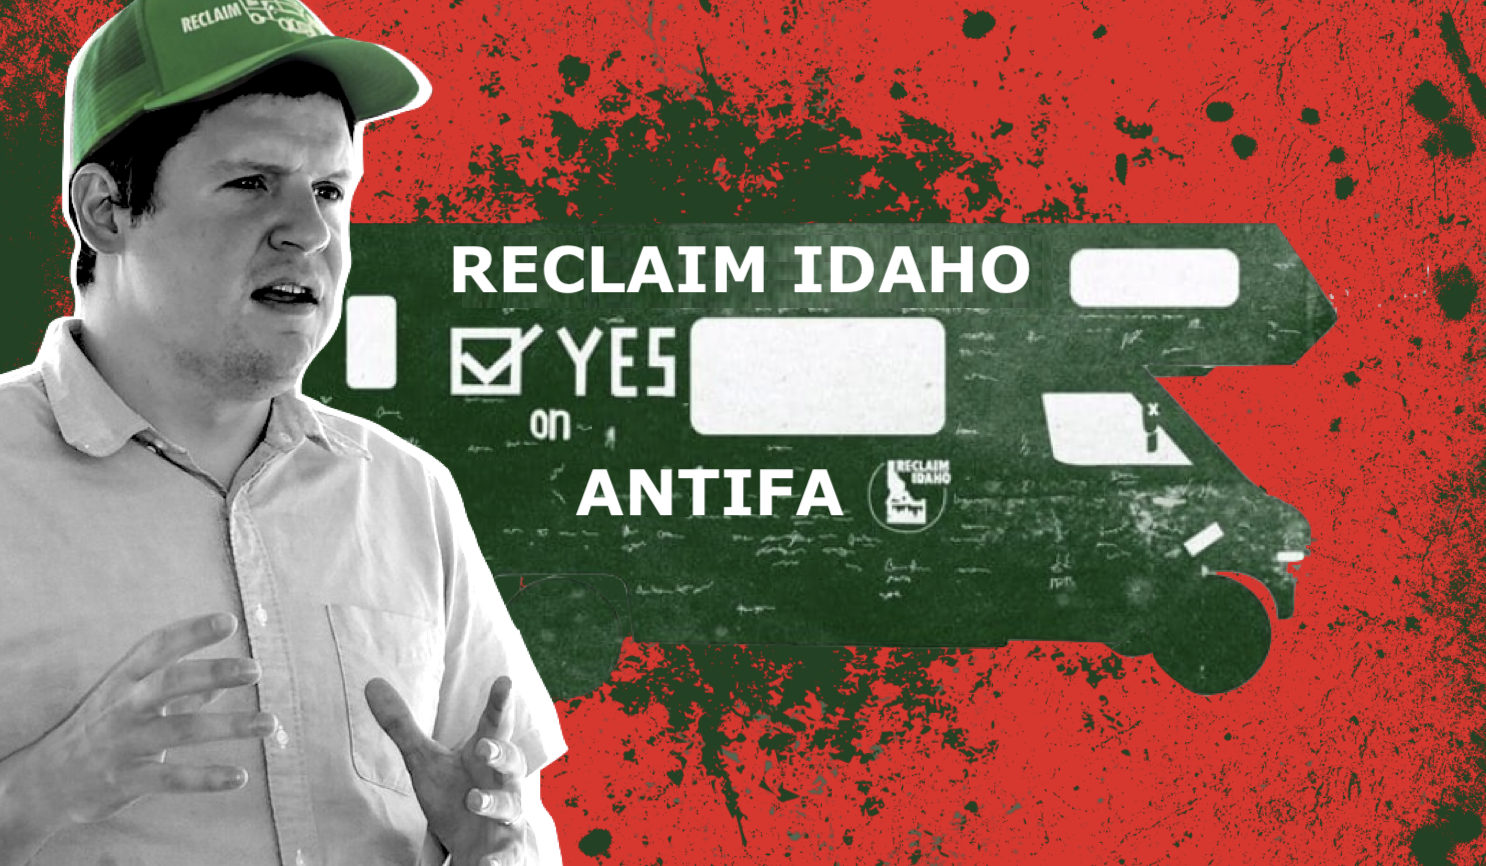 Reclaim Idaho Activists &amp; Antifa Working to Turn Idaho Blue